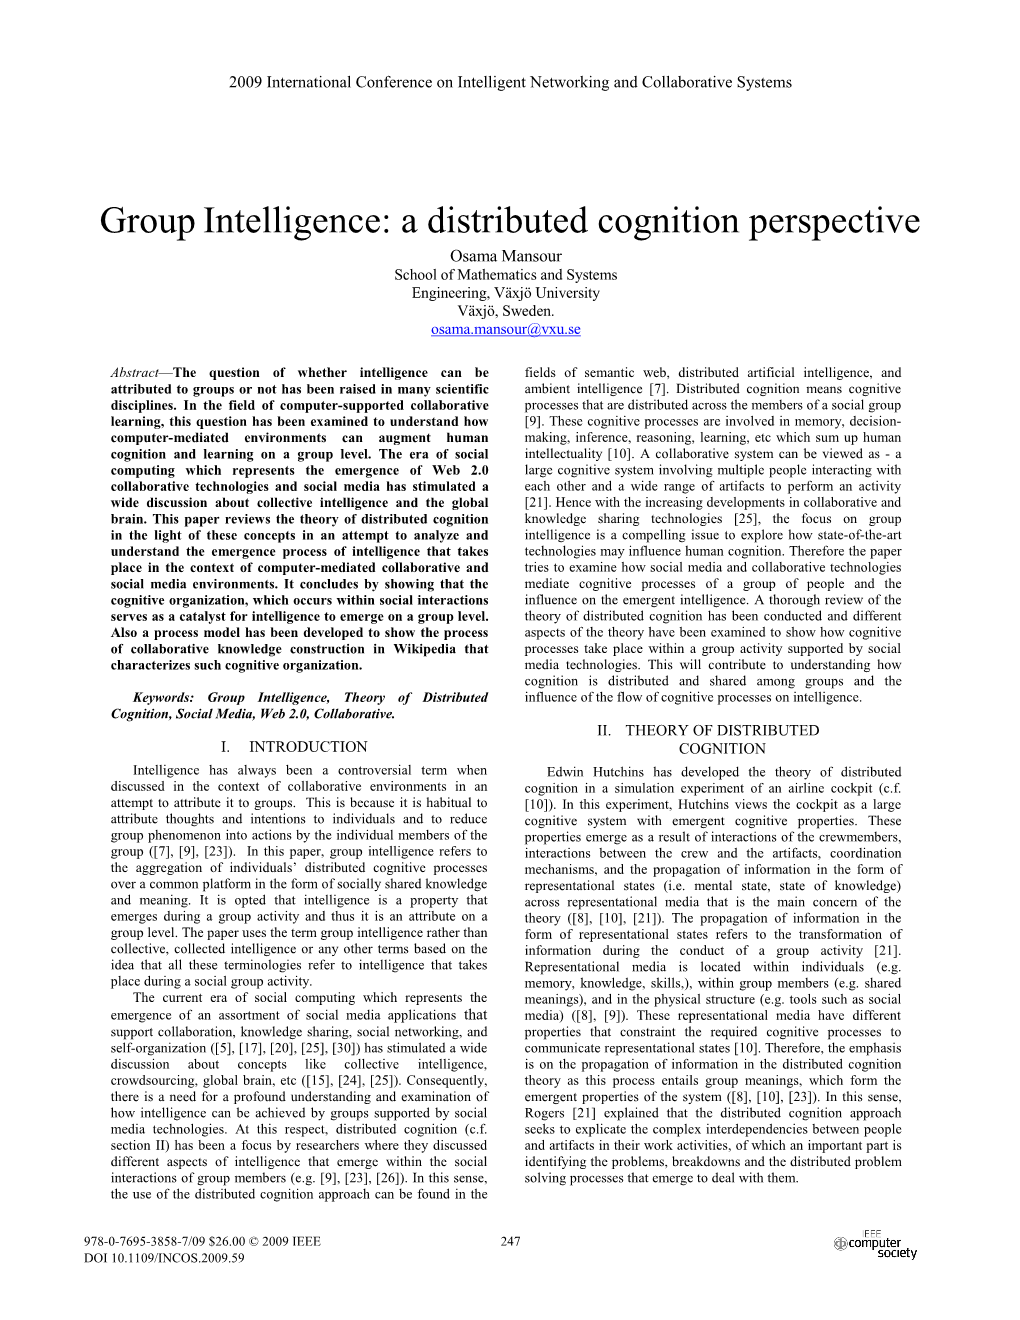 Group Intelligence: a Distributed Cognition Perspective Osama Mansour School of Mathematics and Systems Engineering, Växjö University Växjö, Sweden